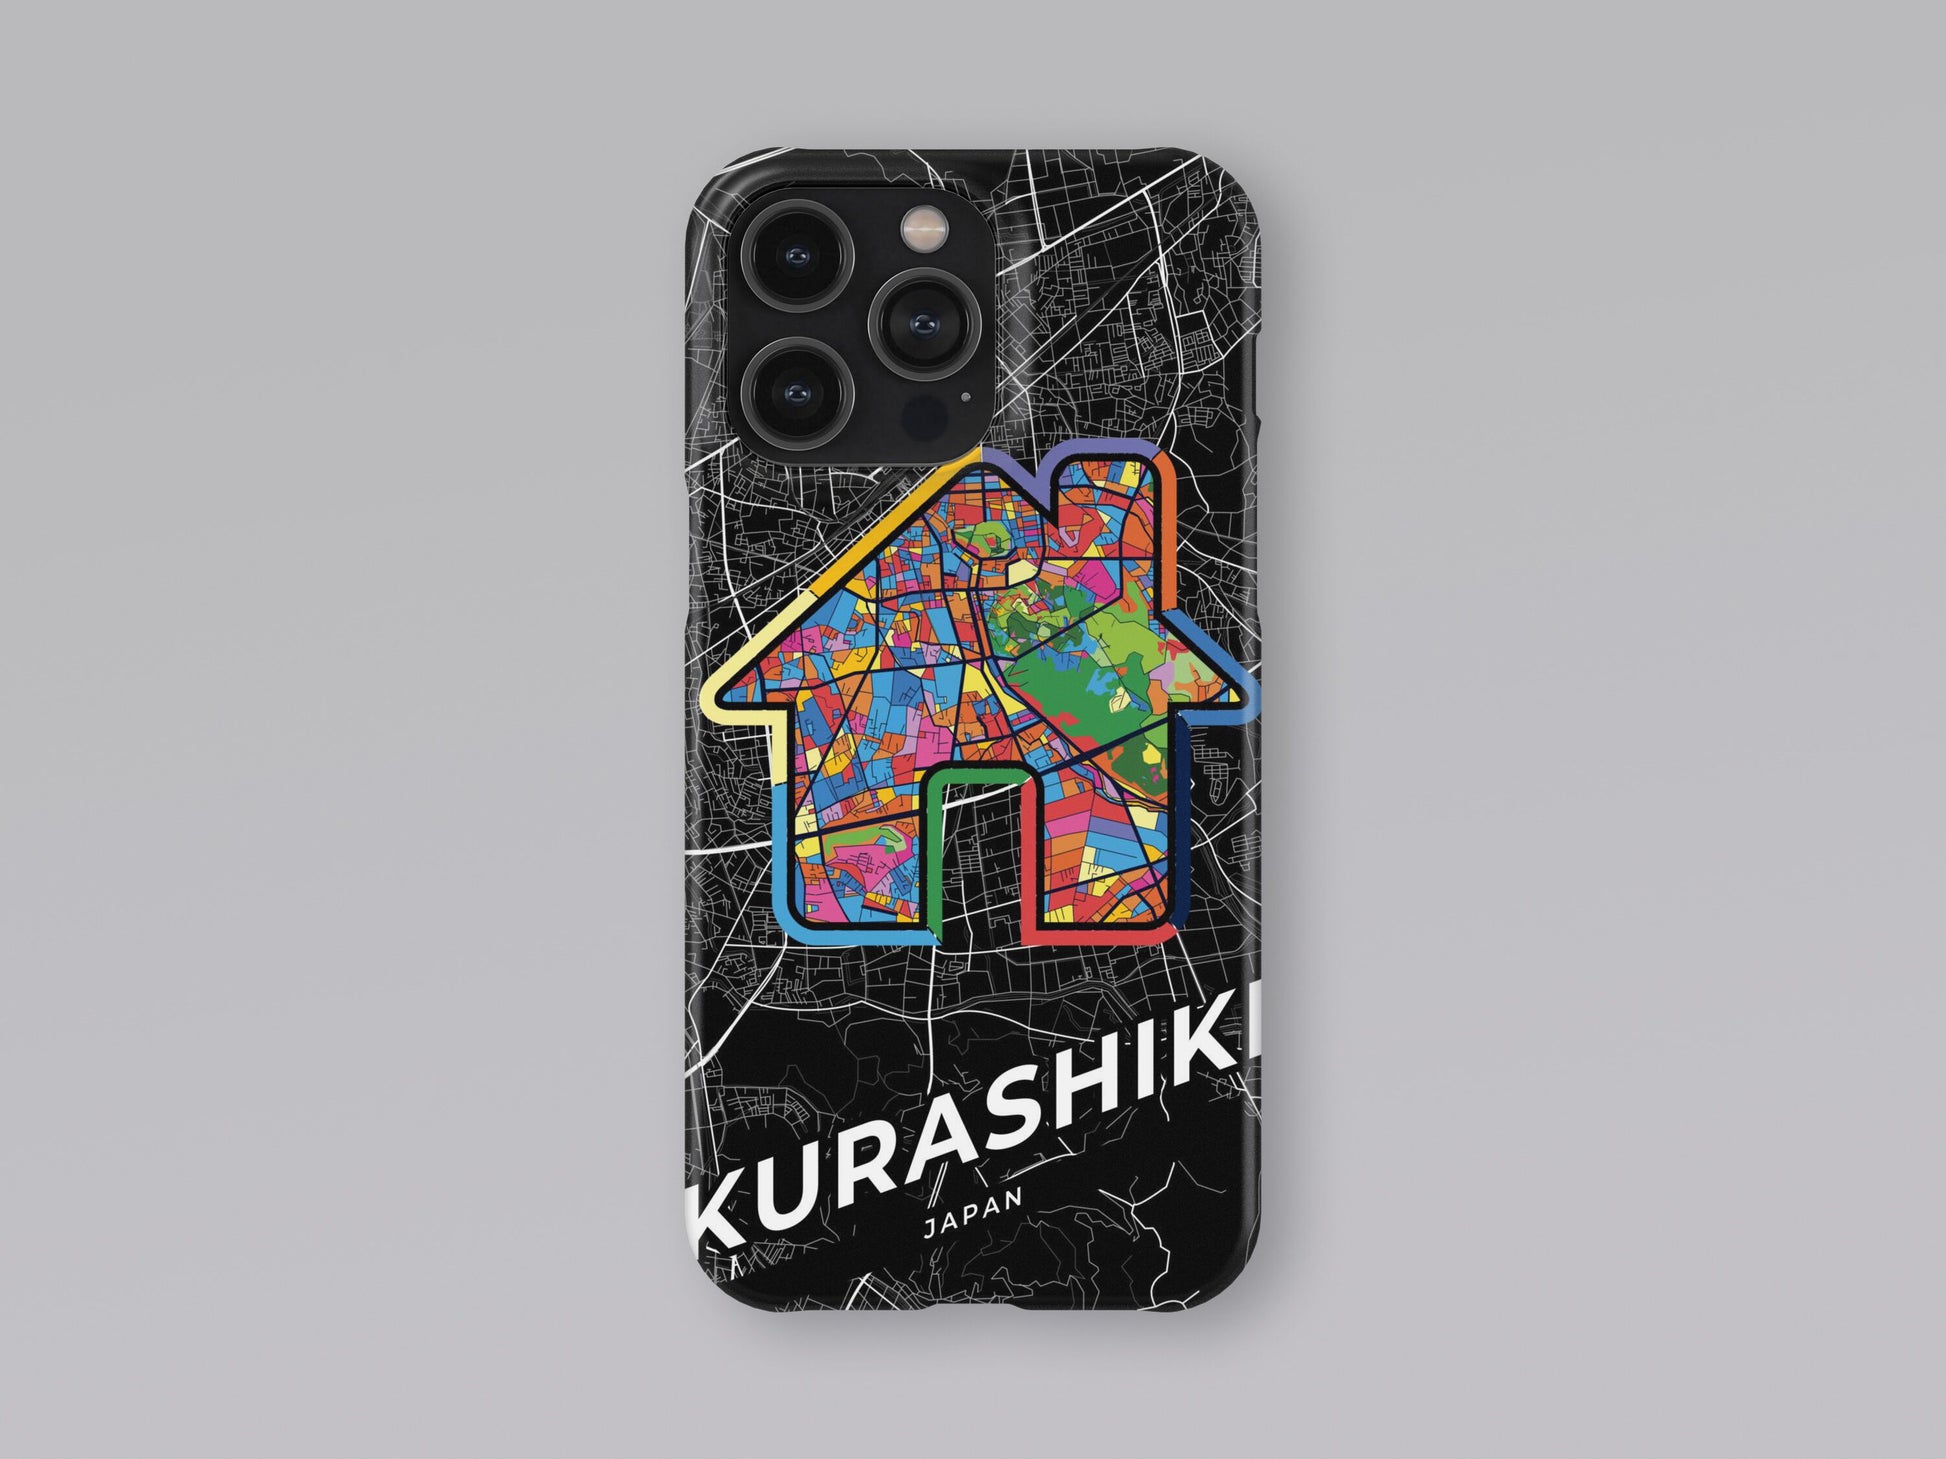 Kurashiki Japan slim phone case with colorful icon. Birthday, wedding or housewarming gift. Couple match cases. 3